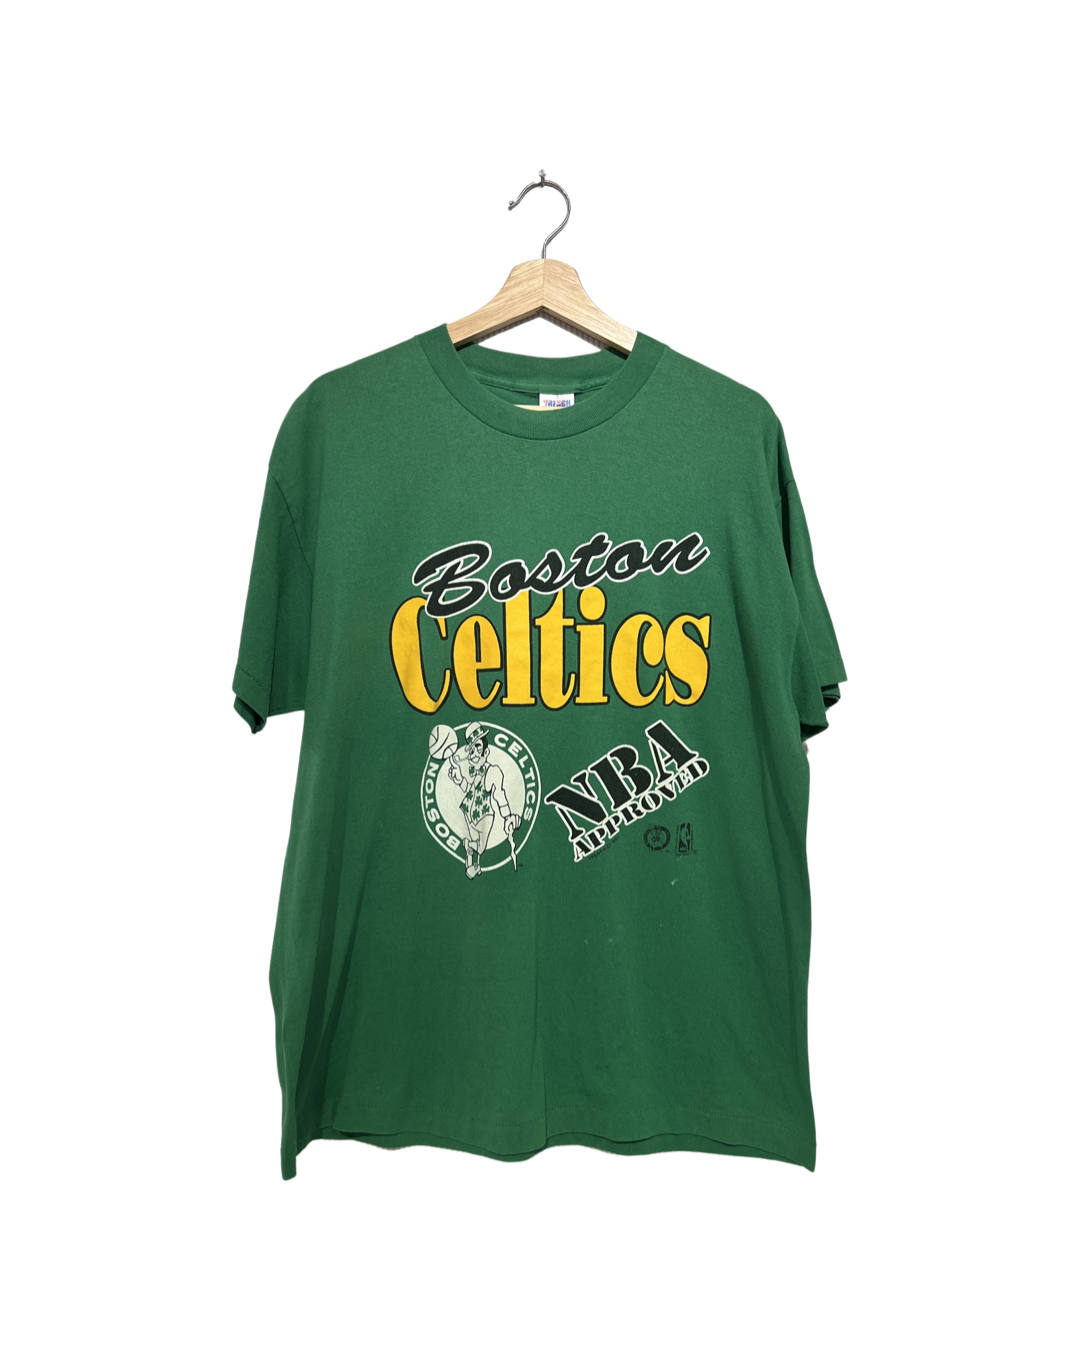 Vintage 1991 Boston Celtics NBA Promo Tee